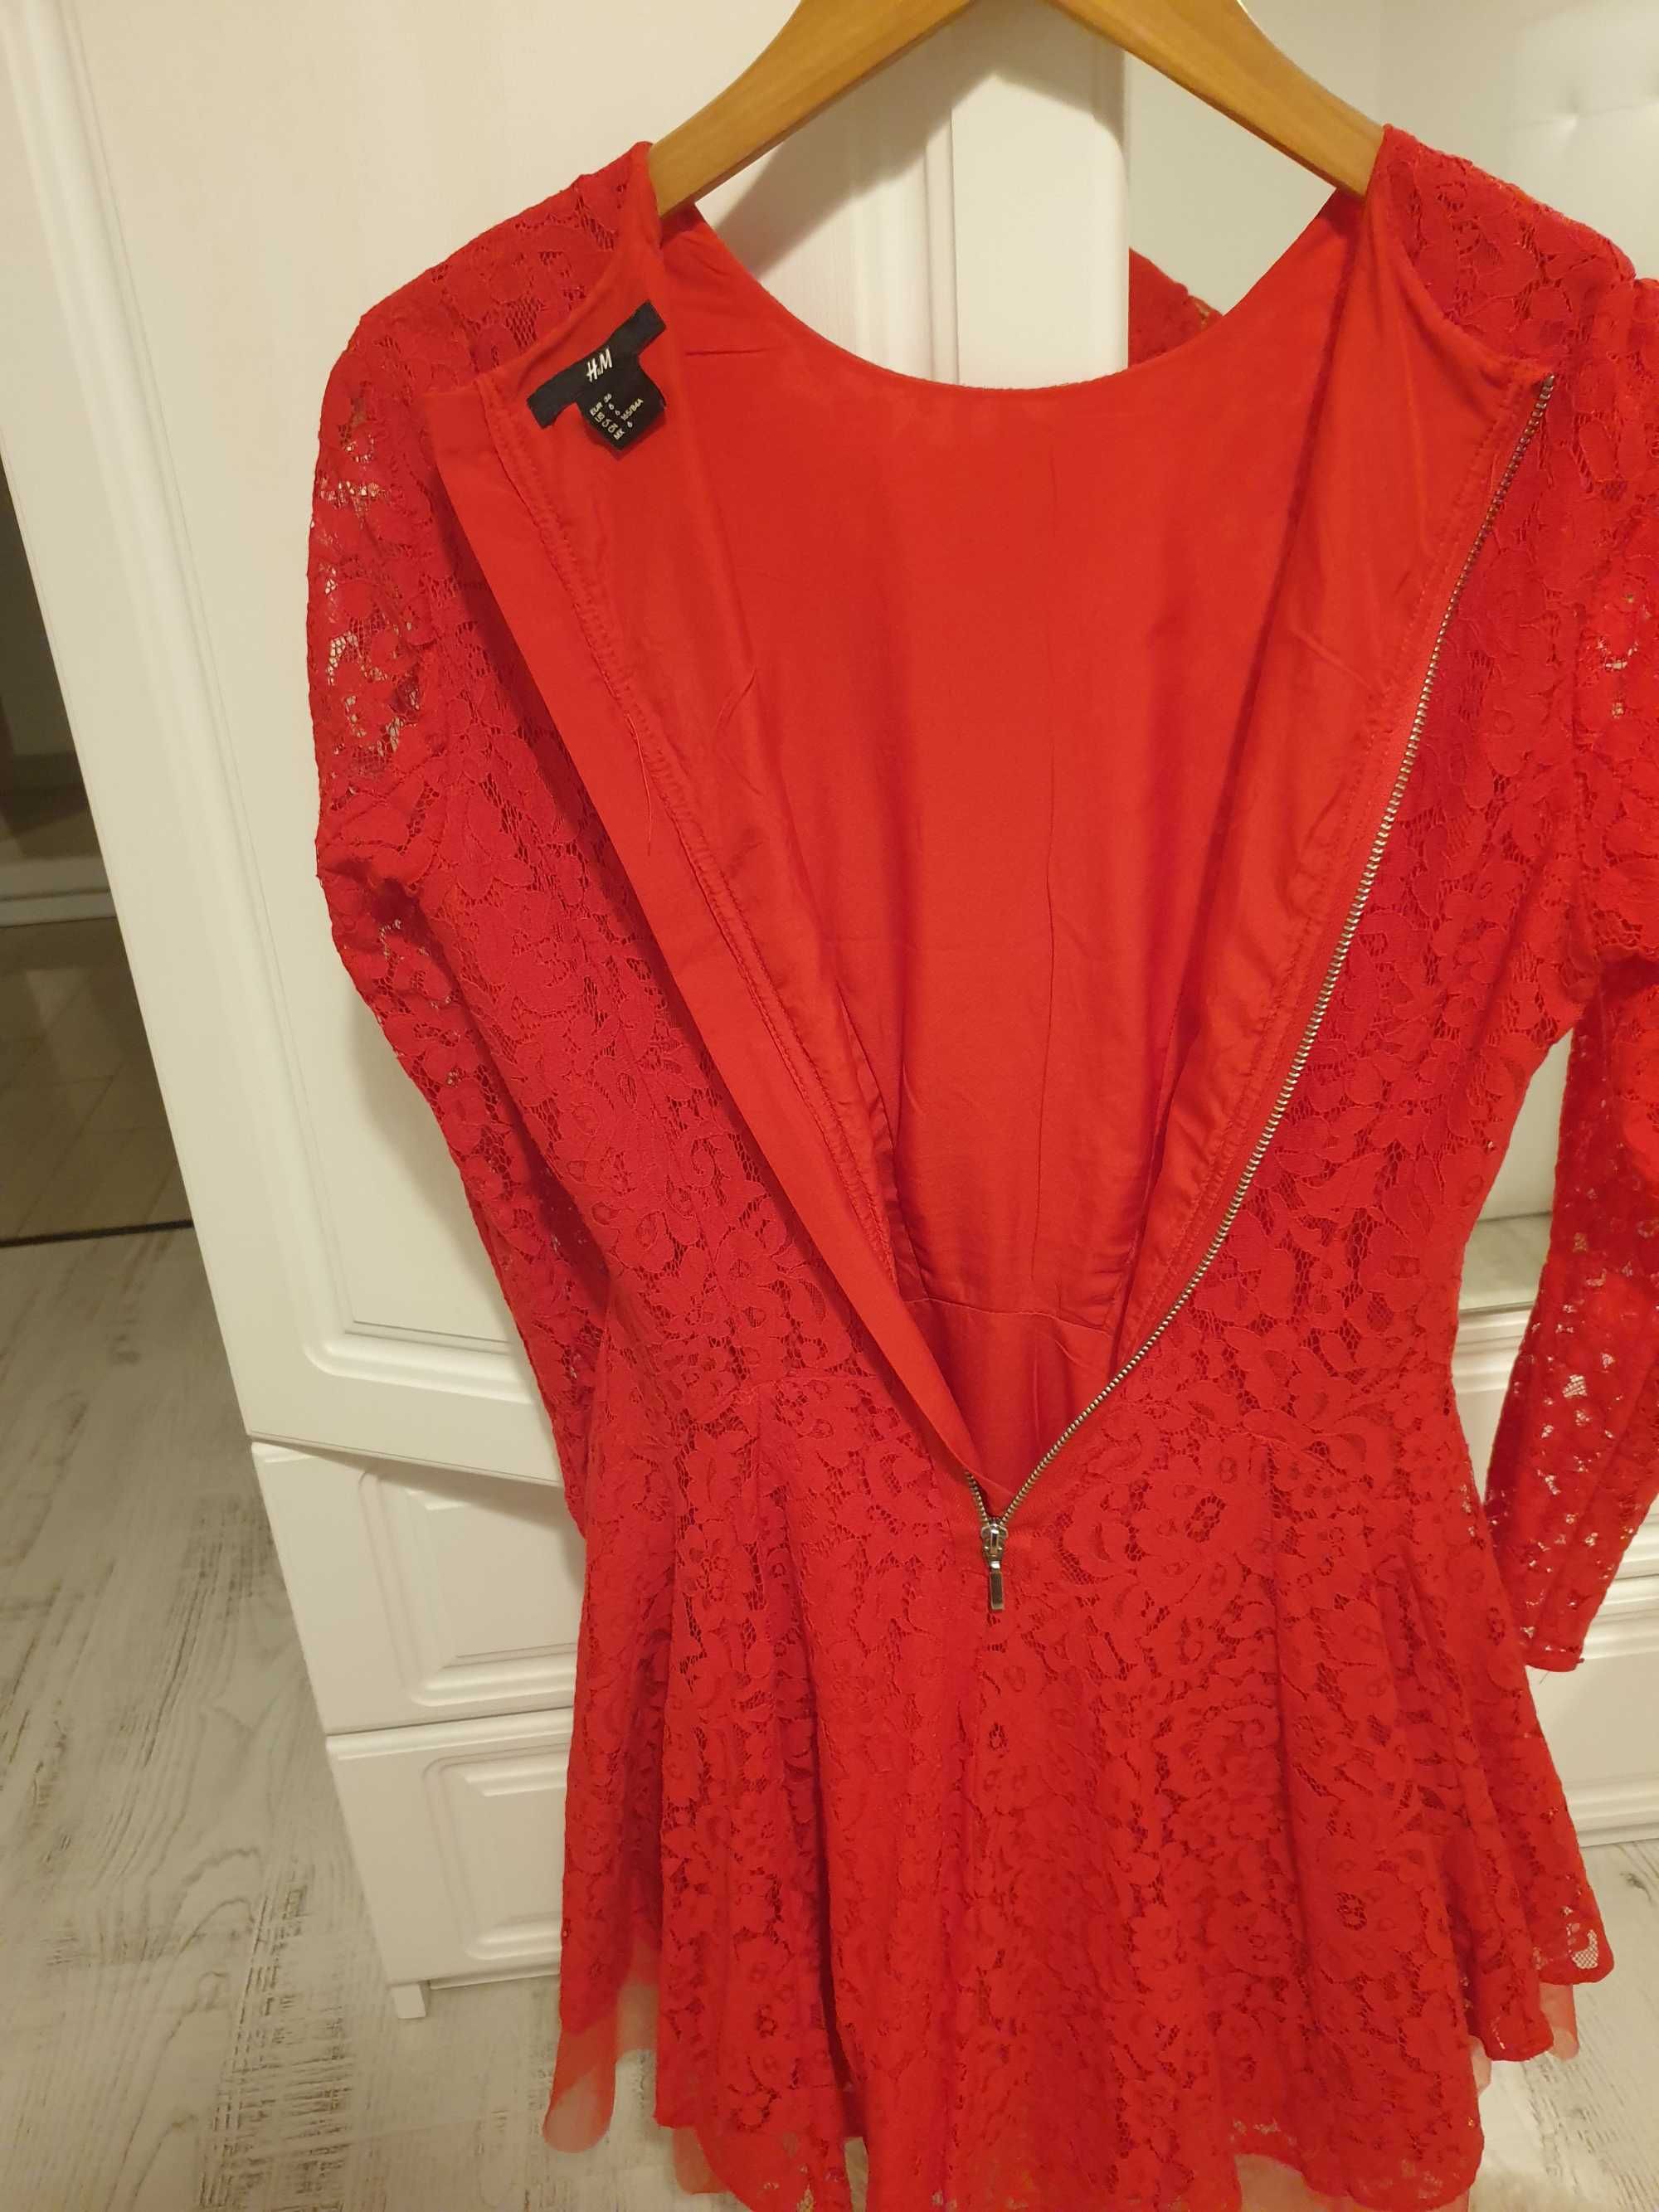 Rochie de dantelă, roșie, H&M, mărime S-M